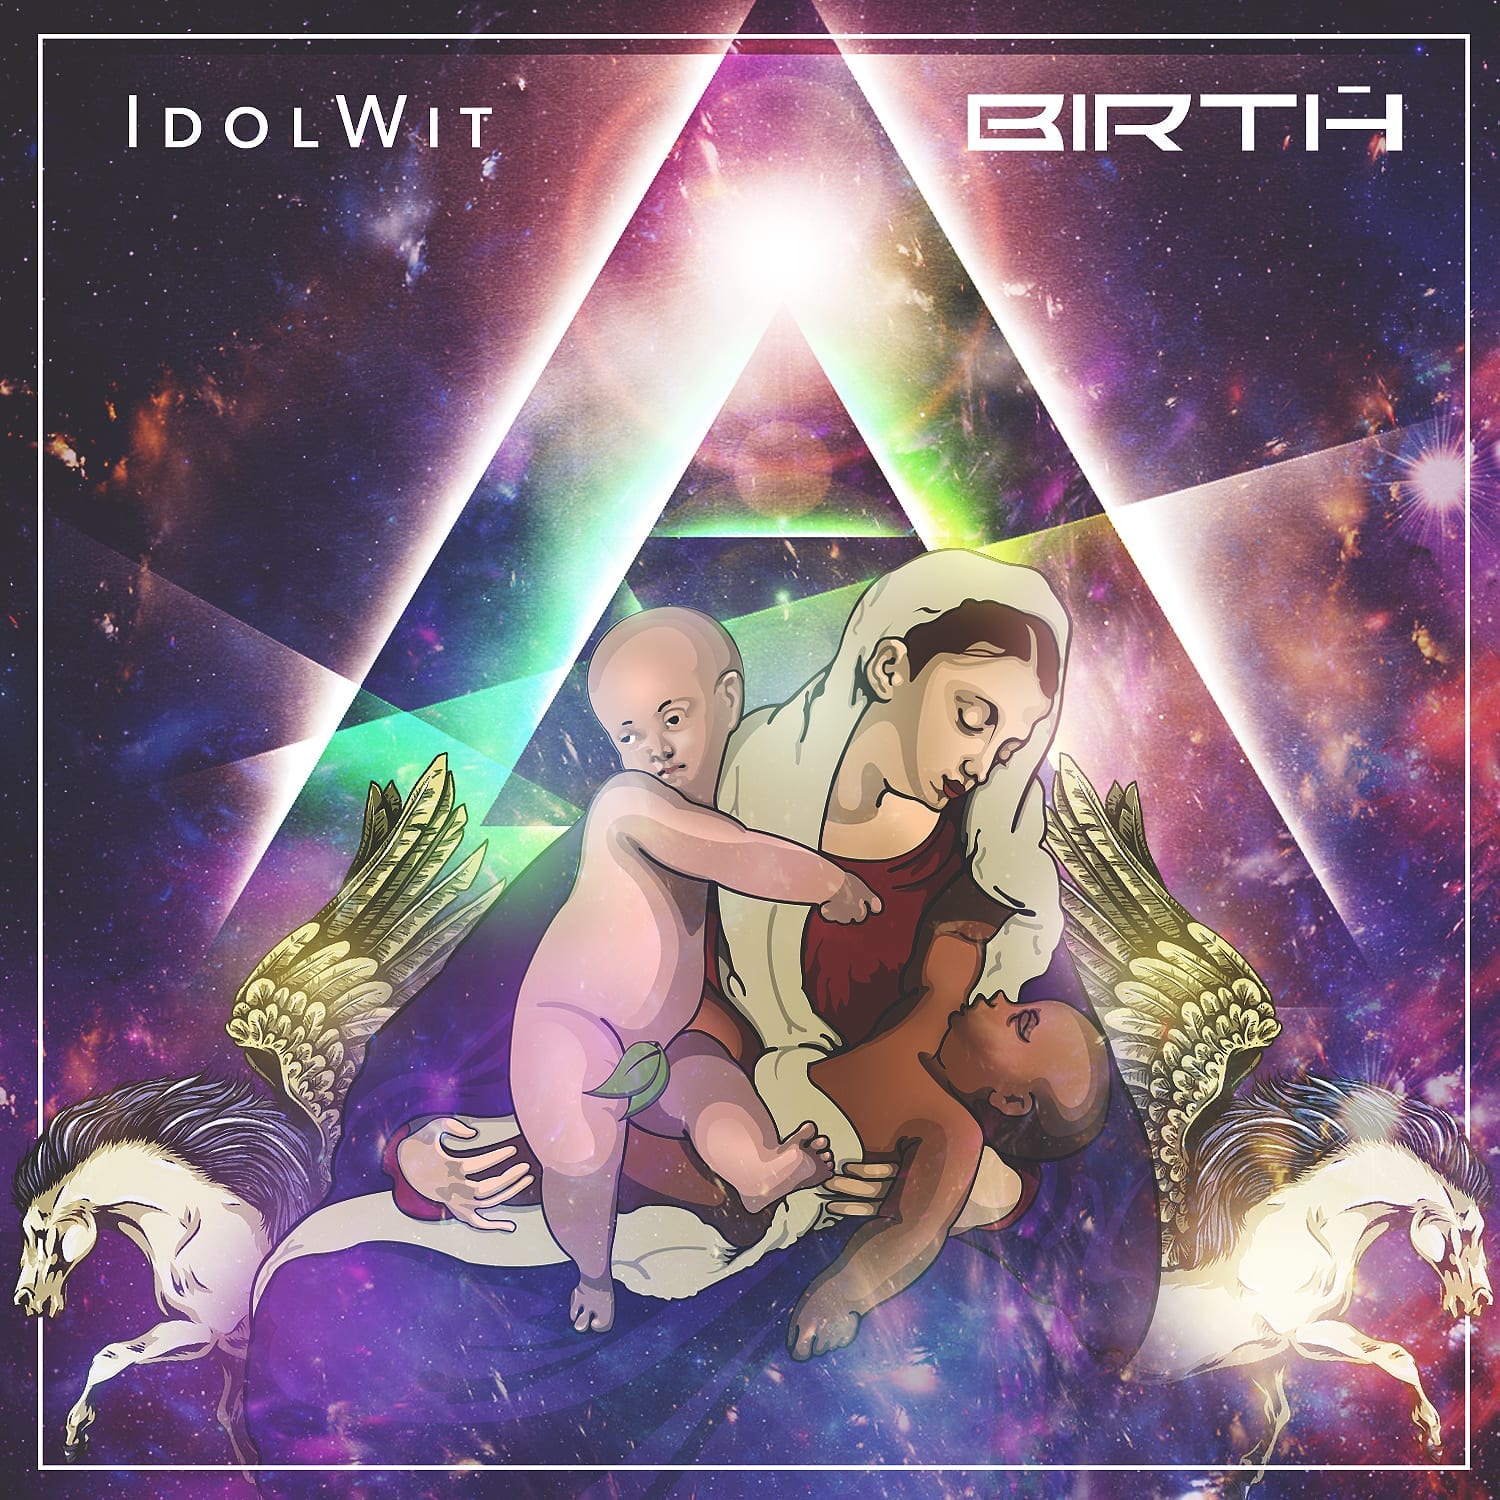 IdolWit - "Birth"